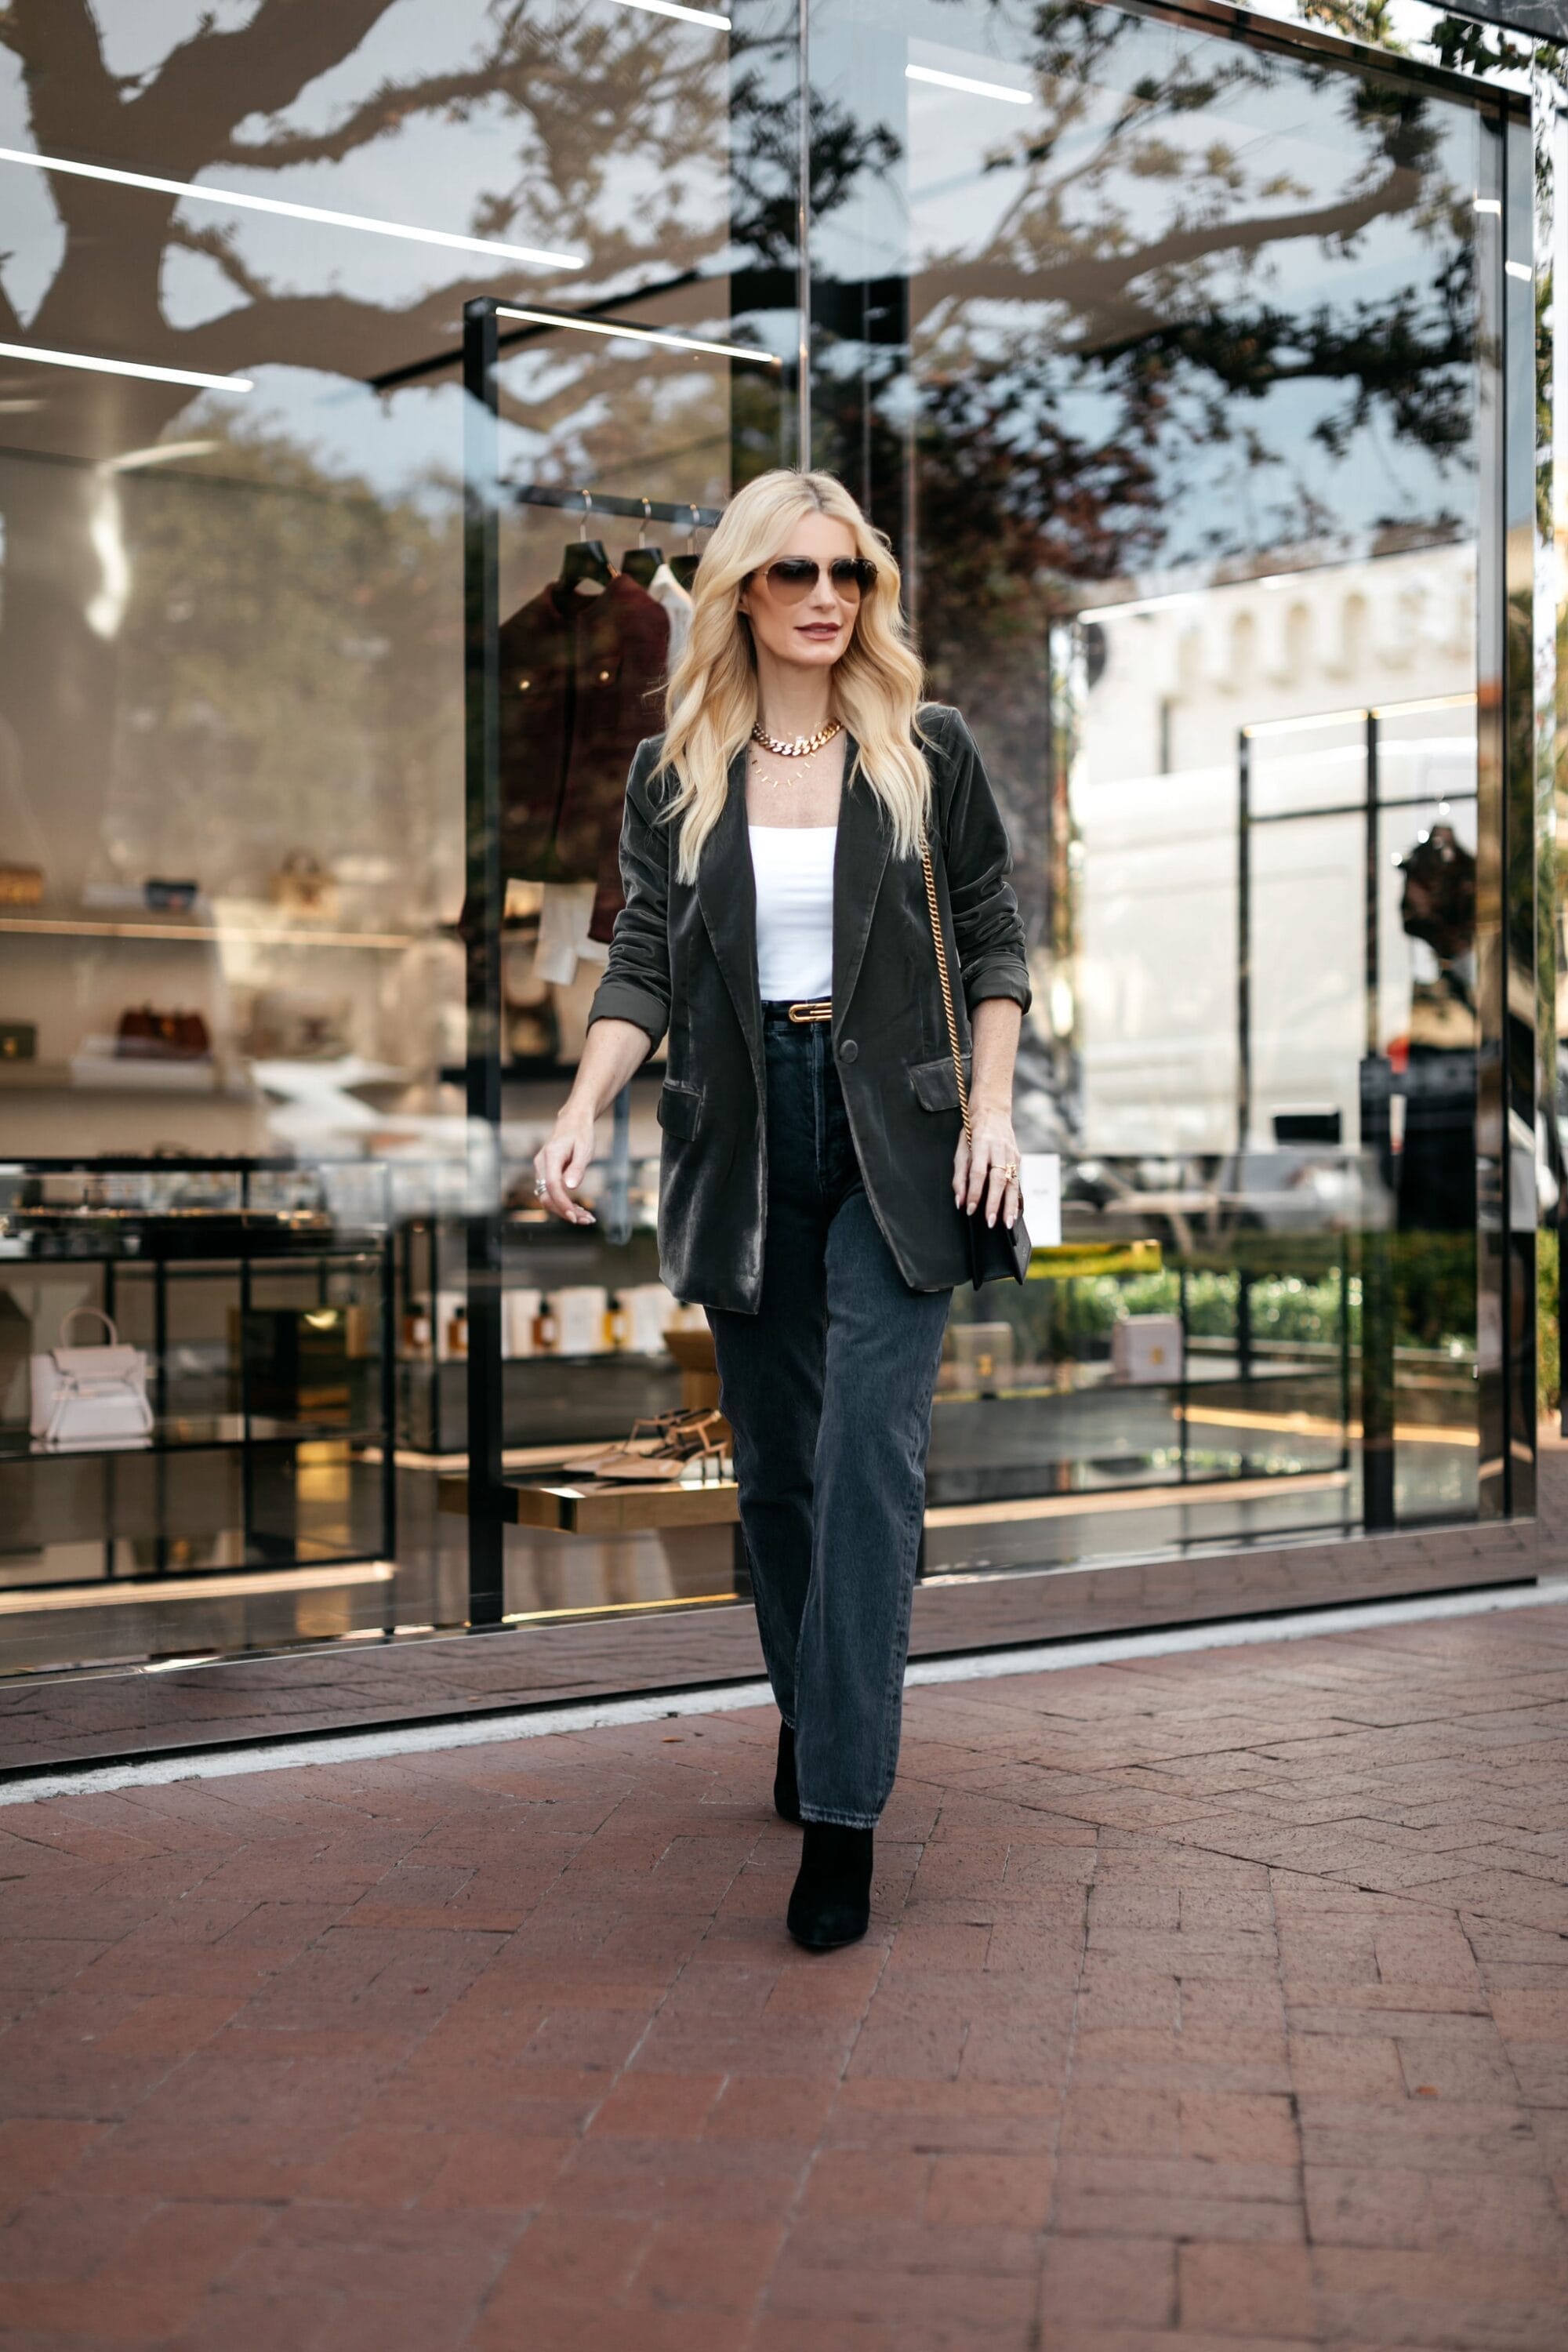 Velvet Blazer Outfit Ideas: 5 Chic Ways to Wear It